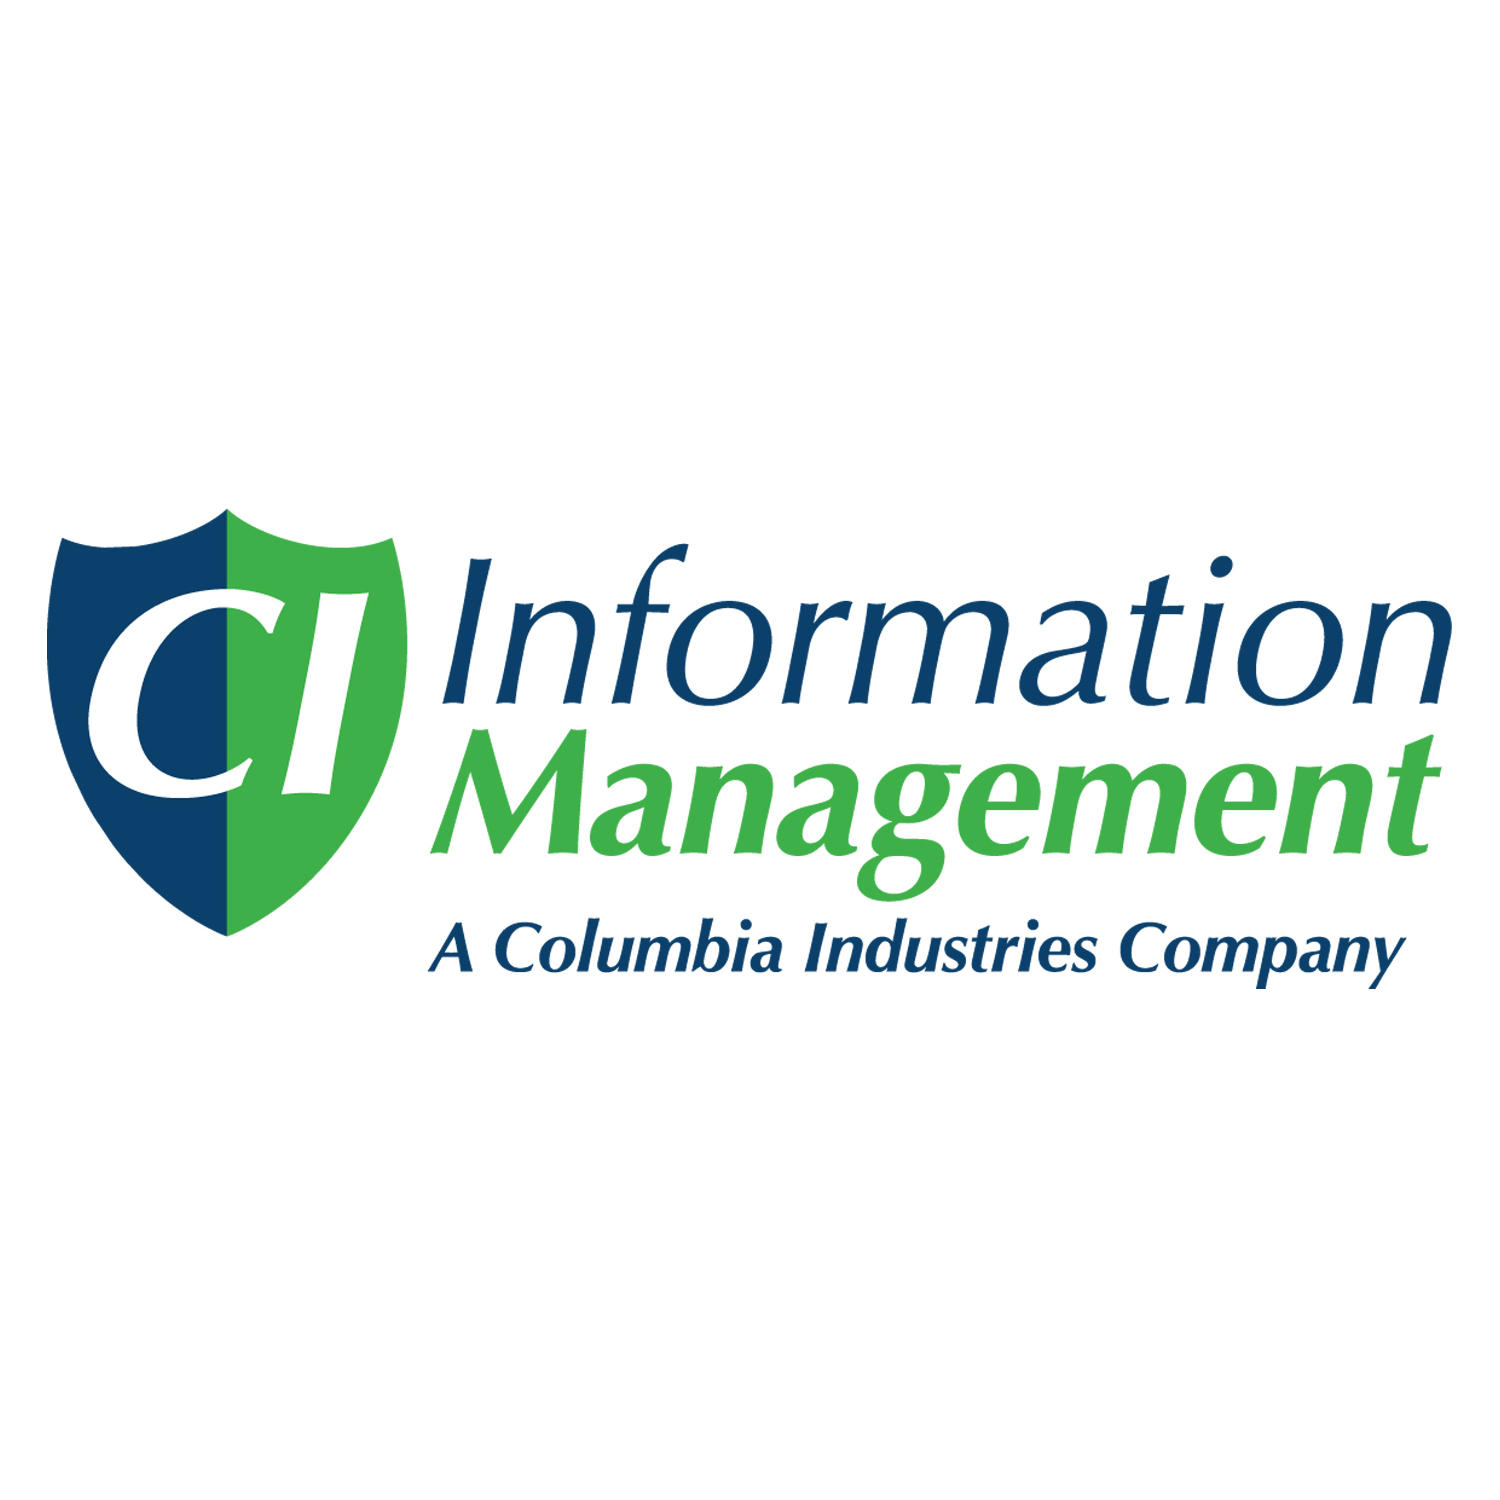 CI Information Management Logo